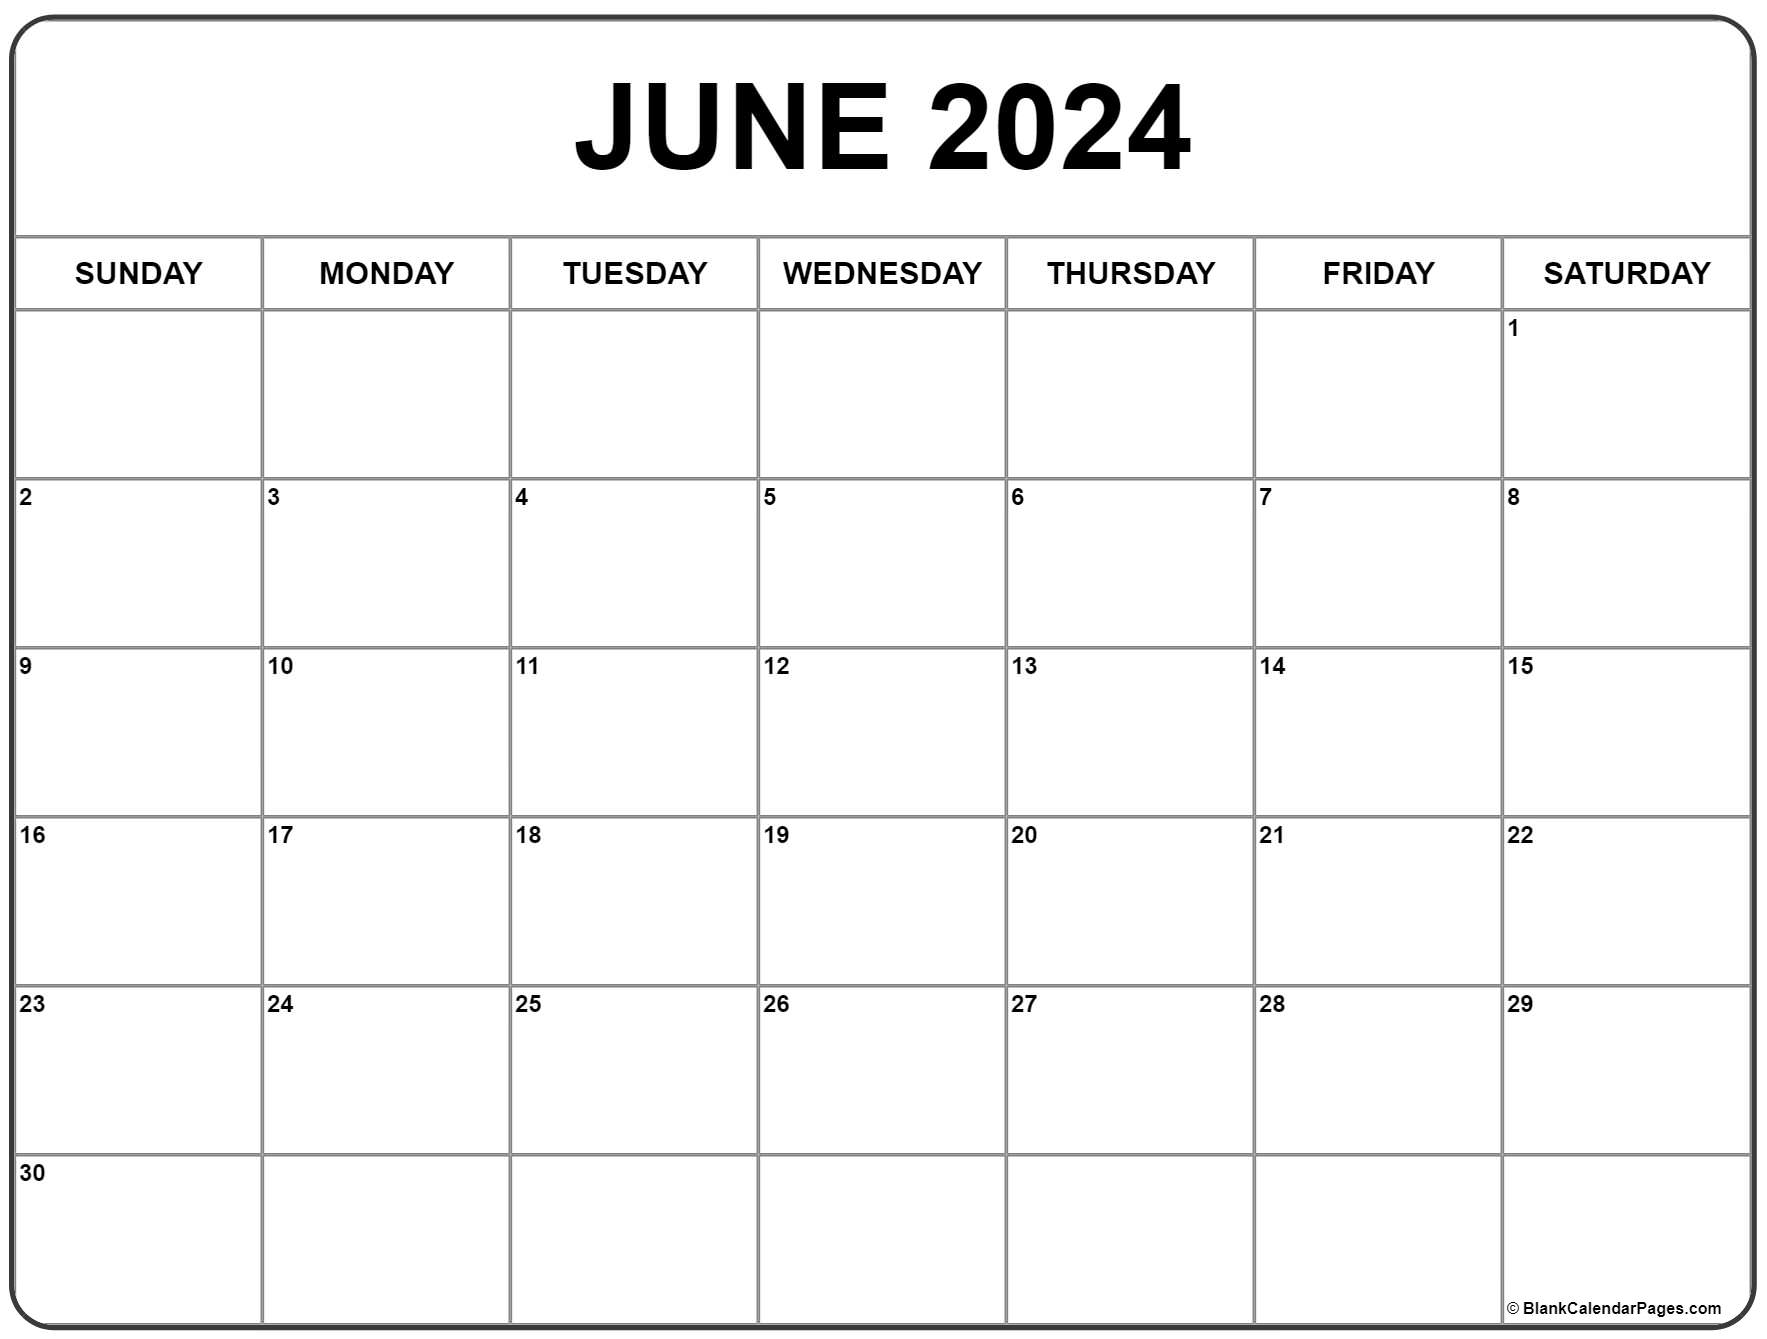 June 2024 Calendar | Free Printable Calendar for Free Printable Calendar June And July 2024